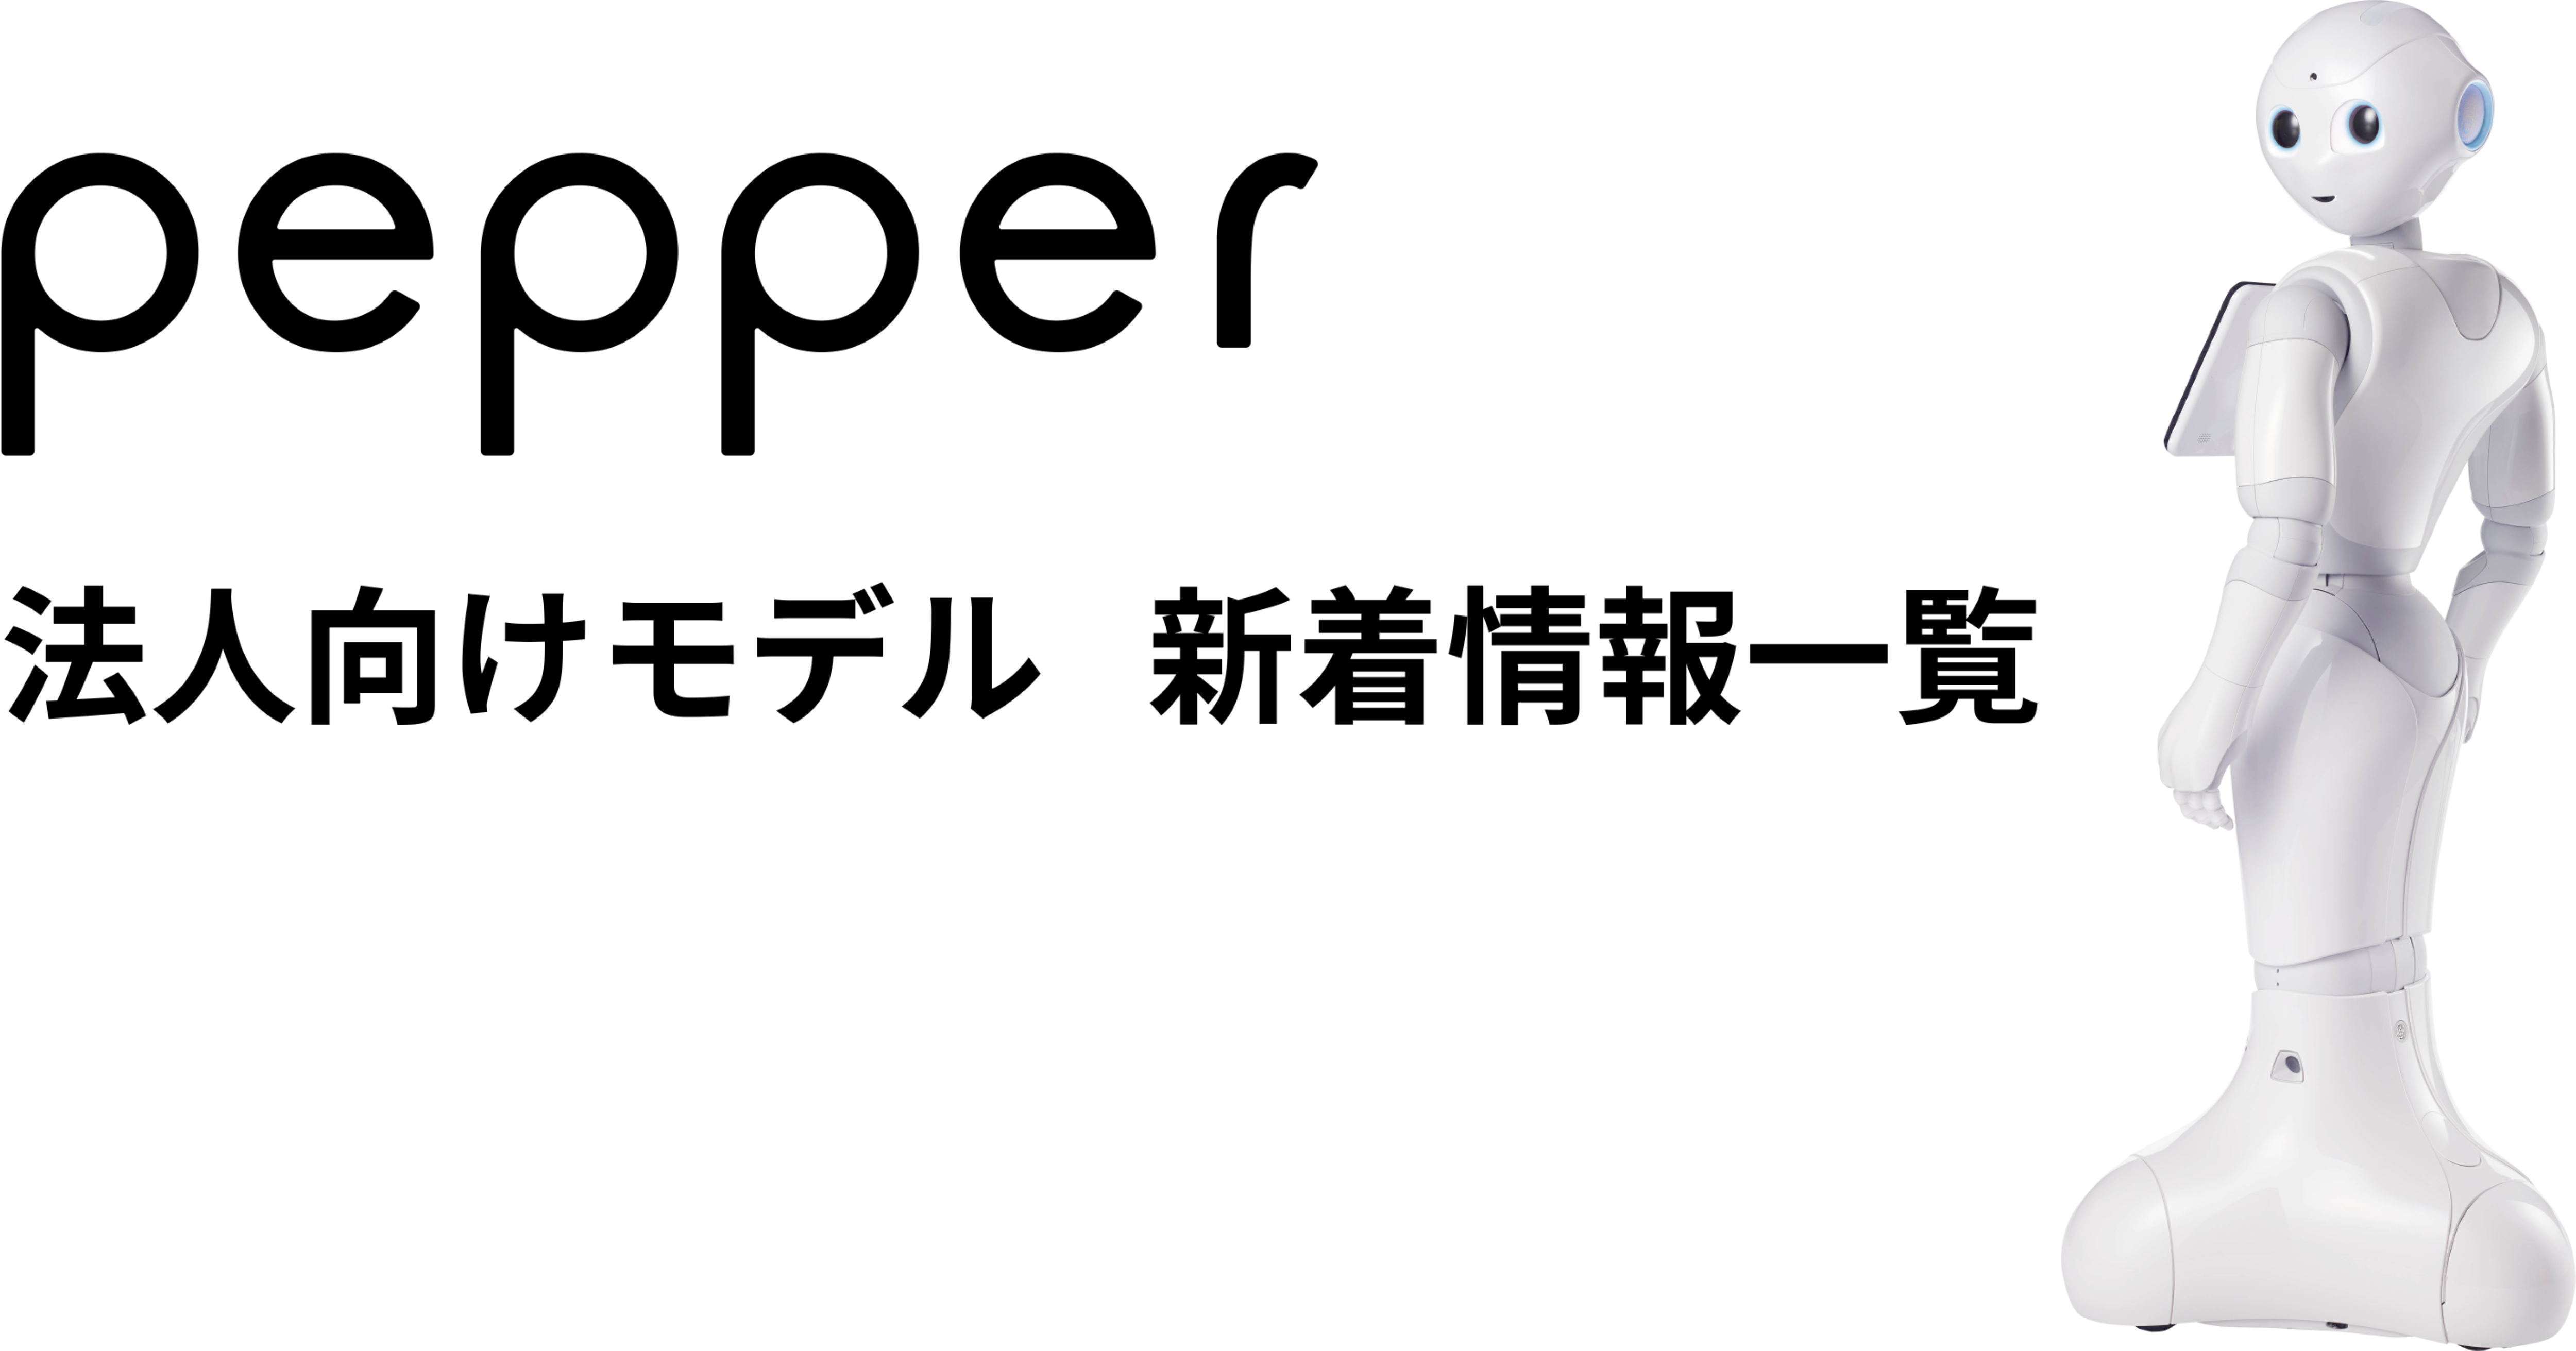 Pepper_P4B_news